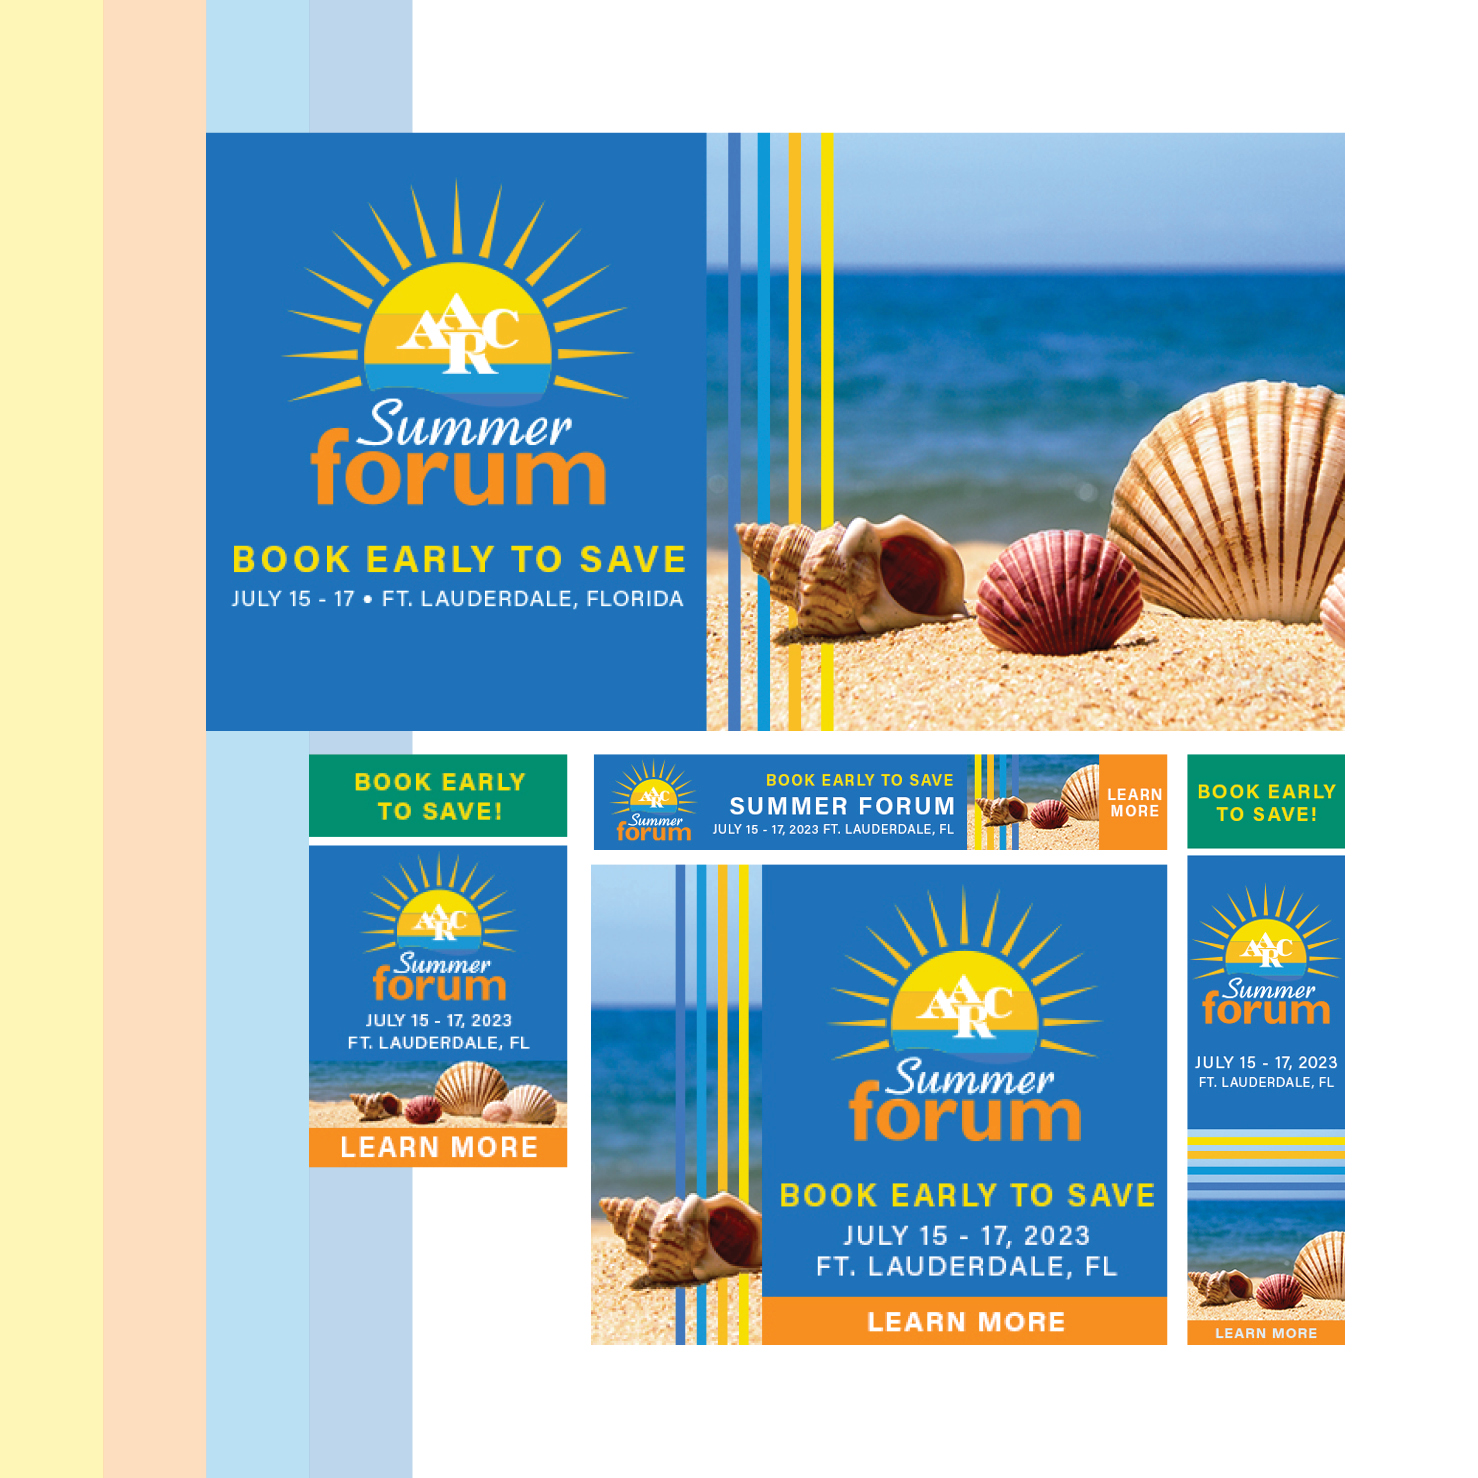 Summer Forum digital advertisement (early bird campaign)